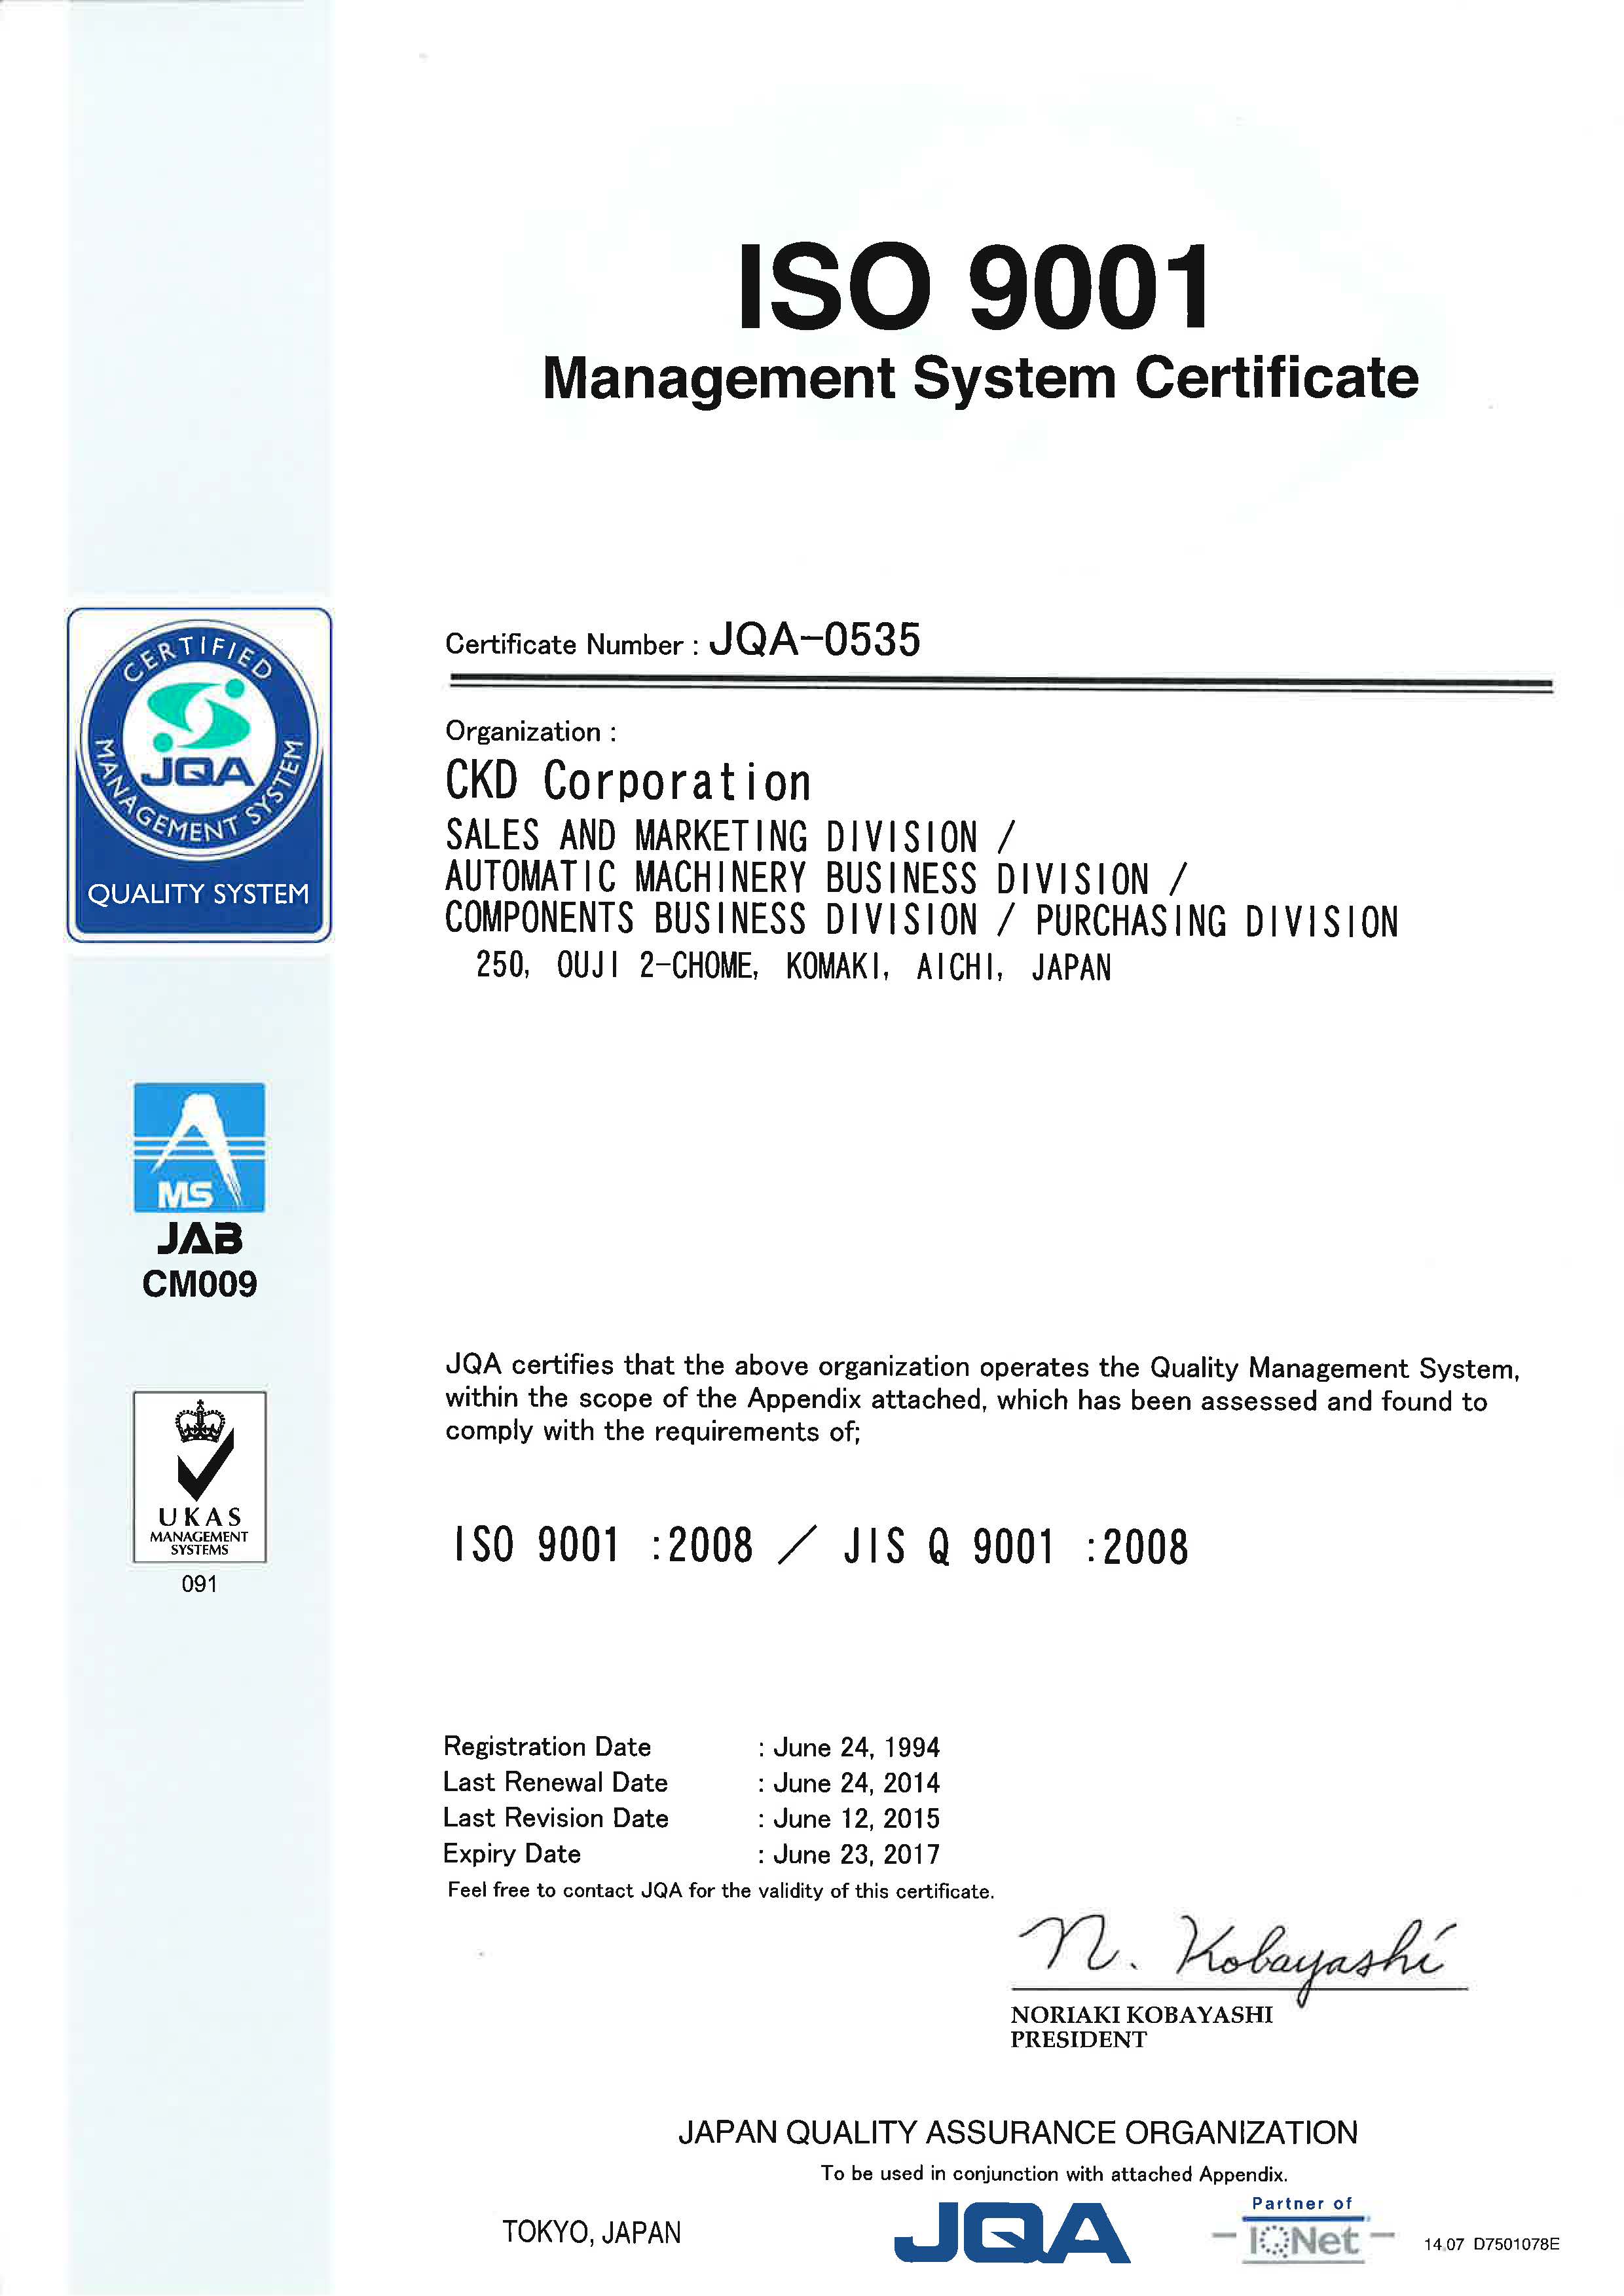 ISO9001 Log Book